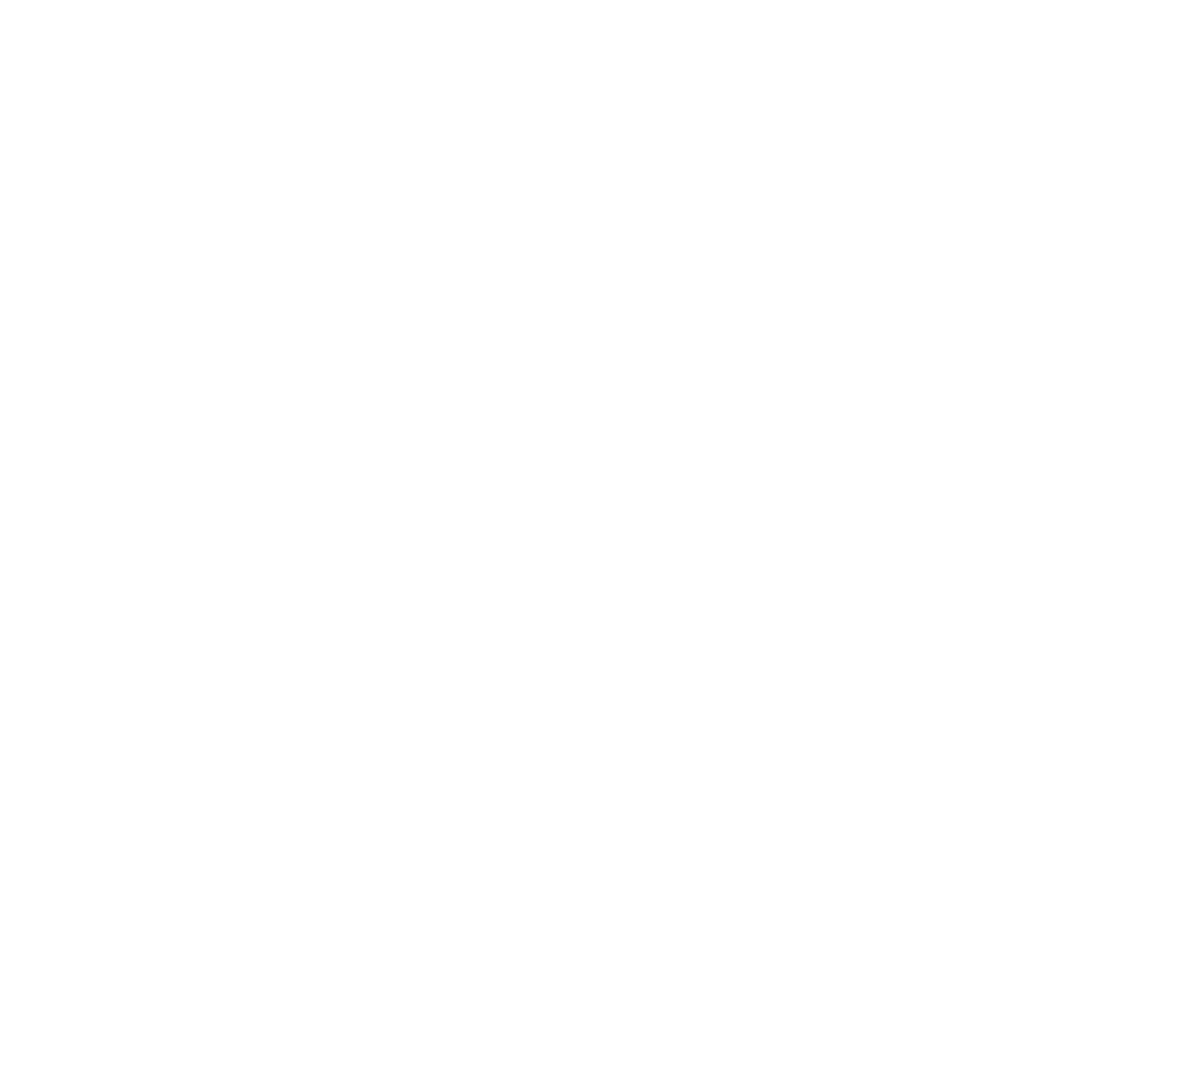 Wheels 2U